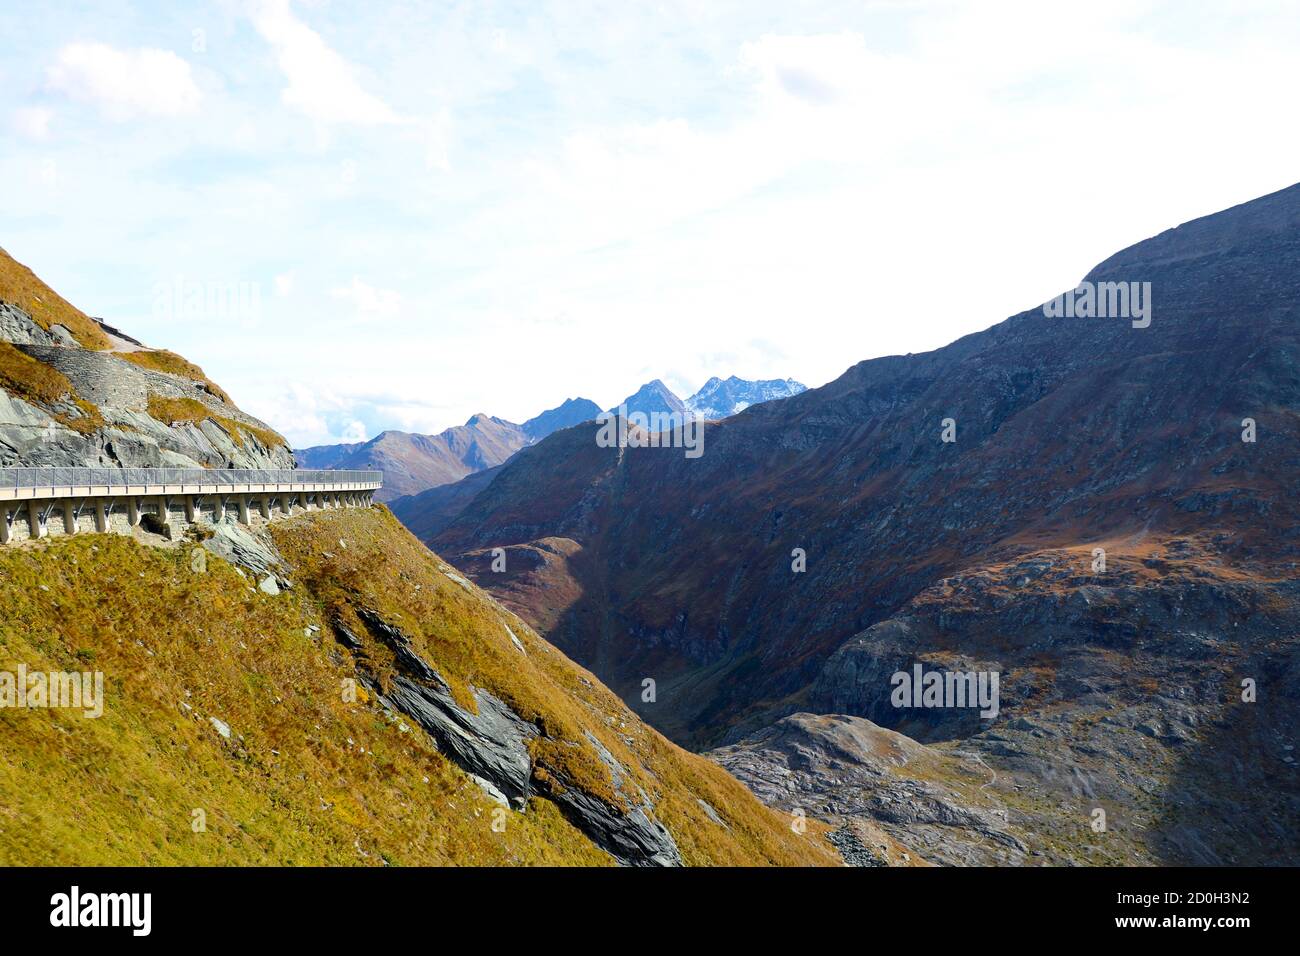 Grossglockner alta strada alpina. Strada di alta montagna nelle Alpi austriache, Austria Foto Stock